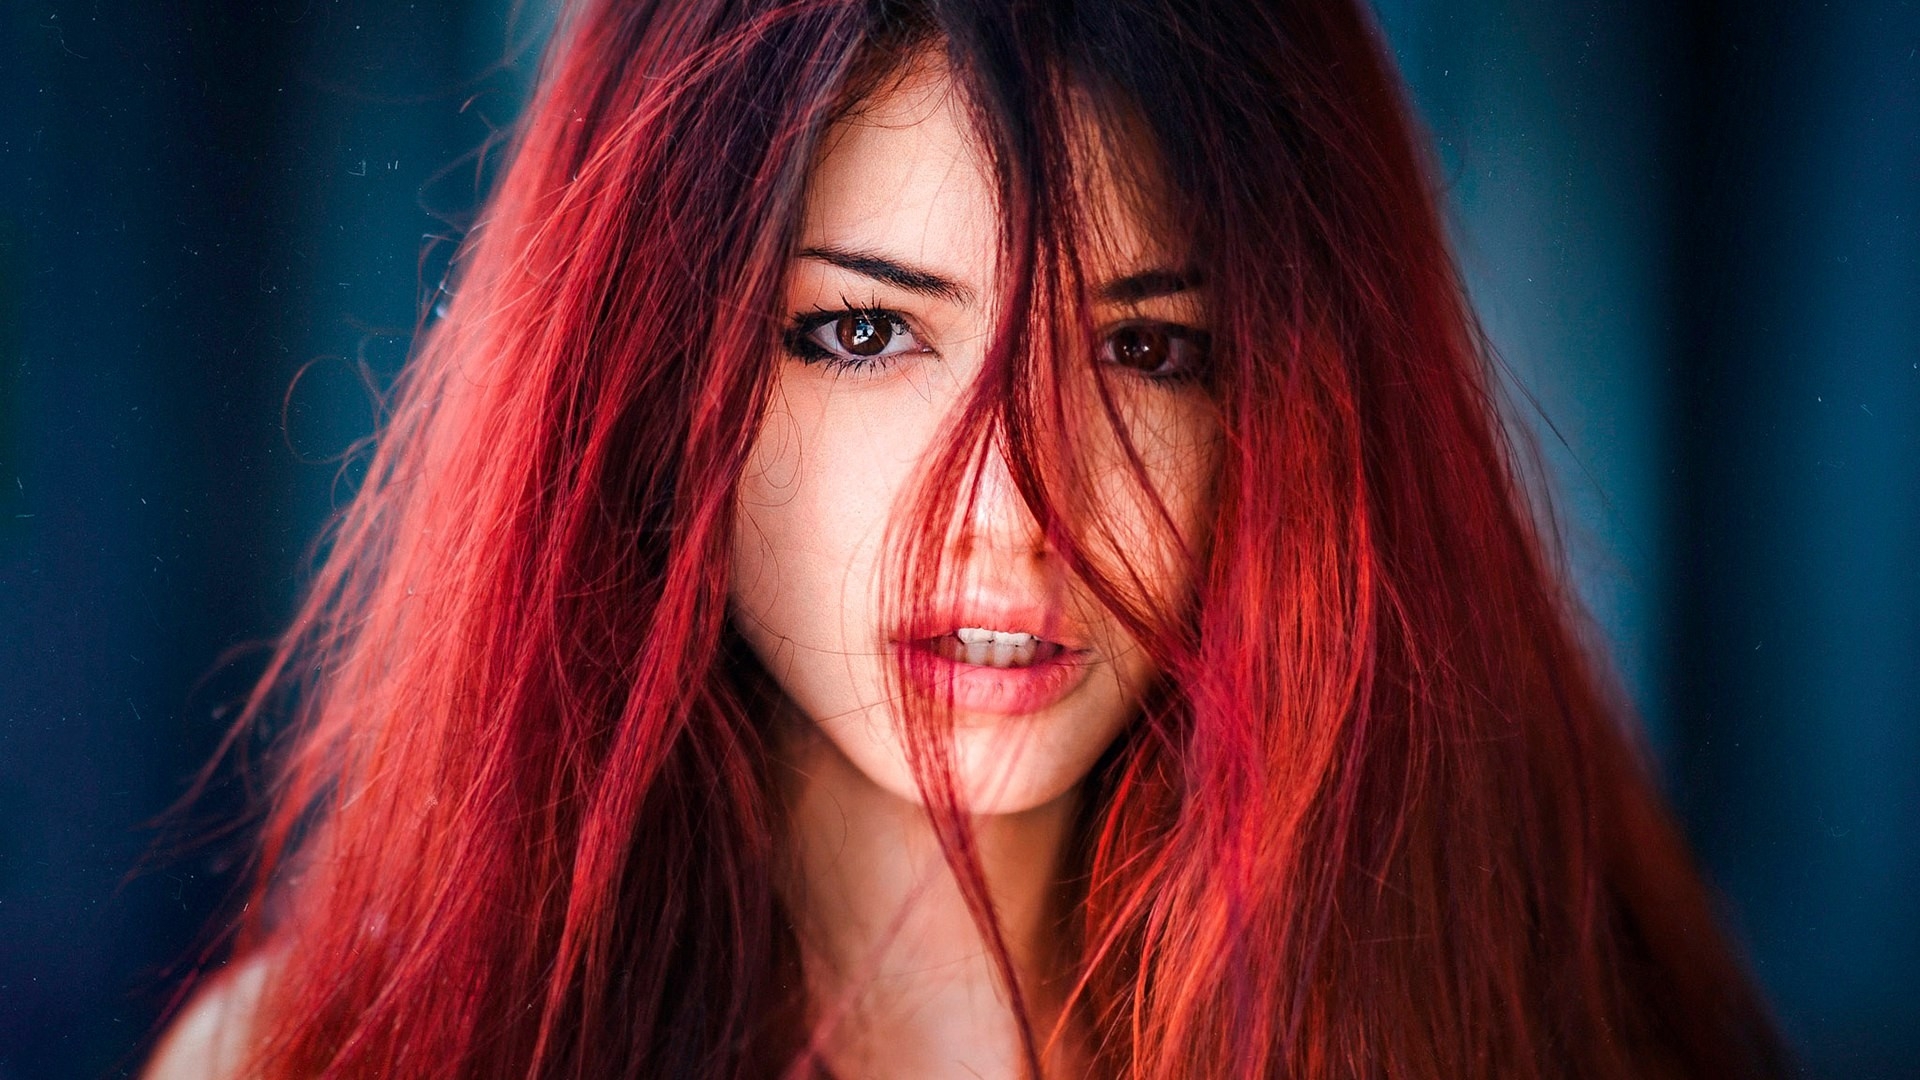 open girl wallpaper,hair,face,red,red hair,eyebrow